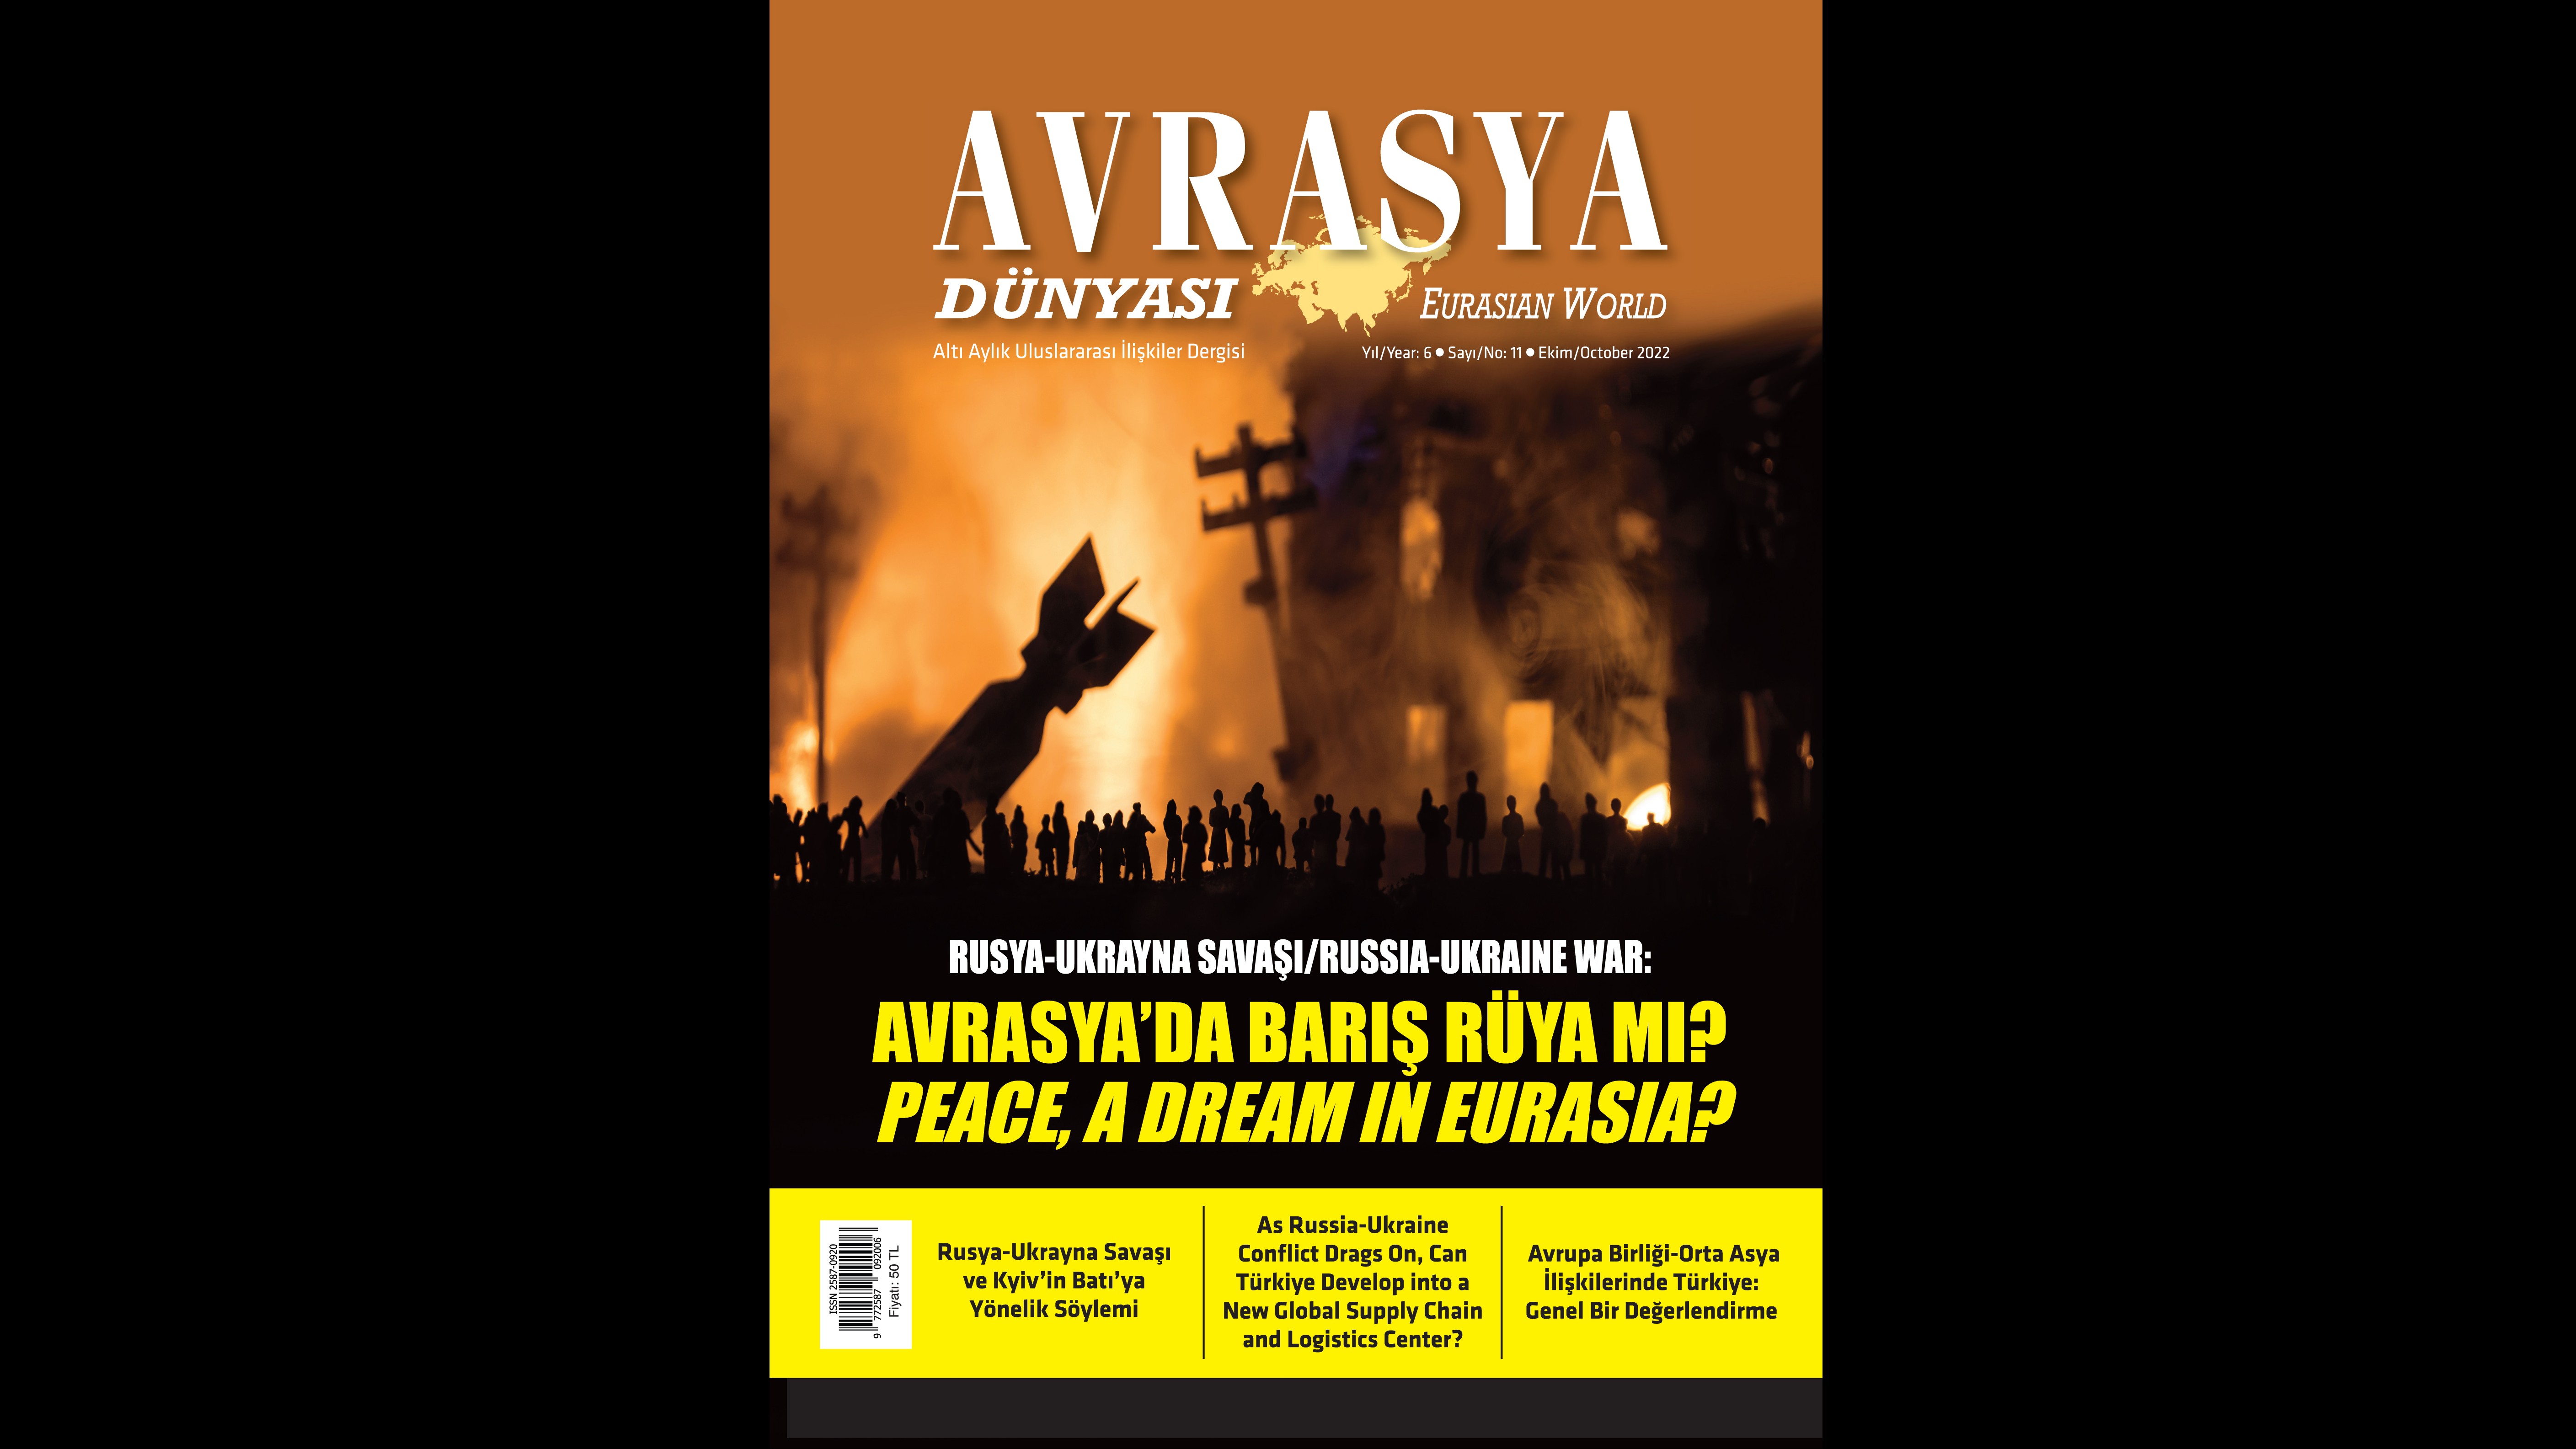 ANNOUNCEMENT: THE 11th ISSUE OF THE AVRASYA DÜNYASI / EURASIAN WORLD JOURNAL PUBLISHED